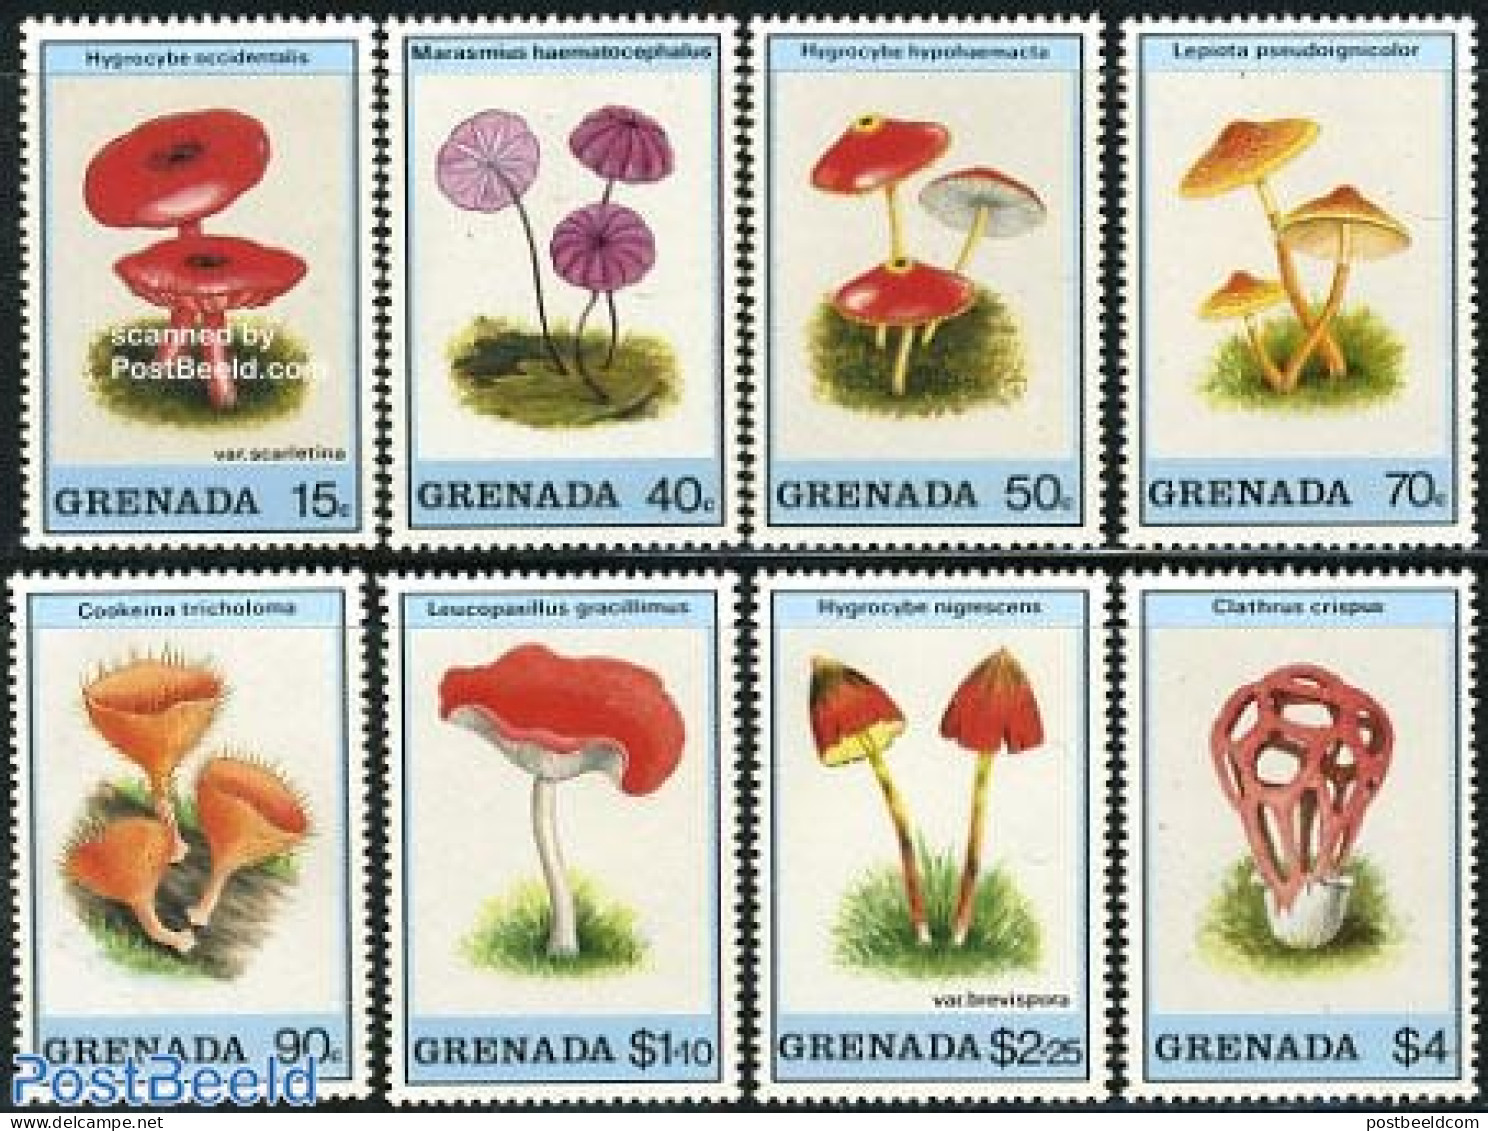 Grenada 1989 Mushrooms 8v, Mint NH, Nature - Mushrooms - Mushrooms